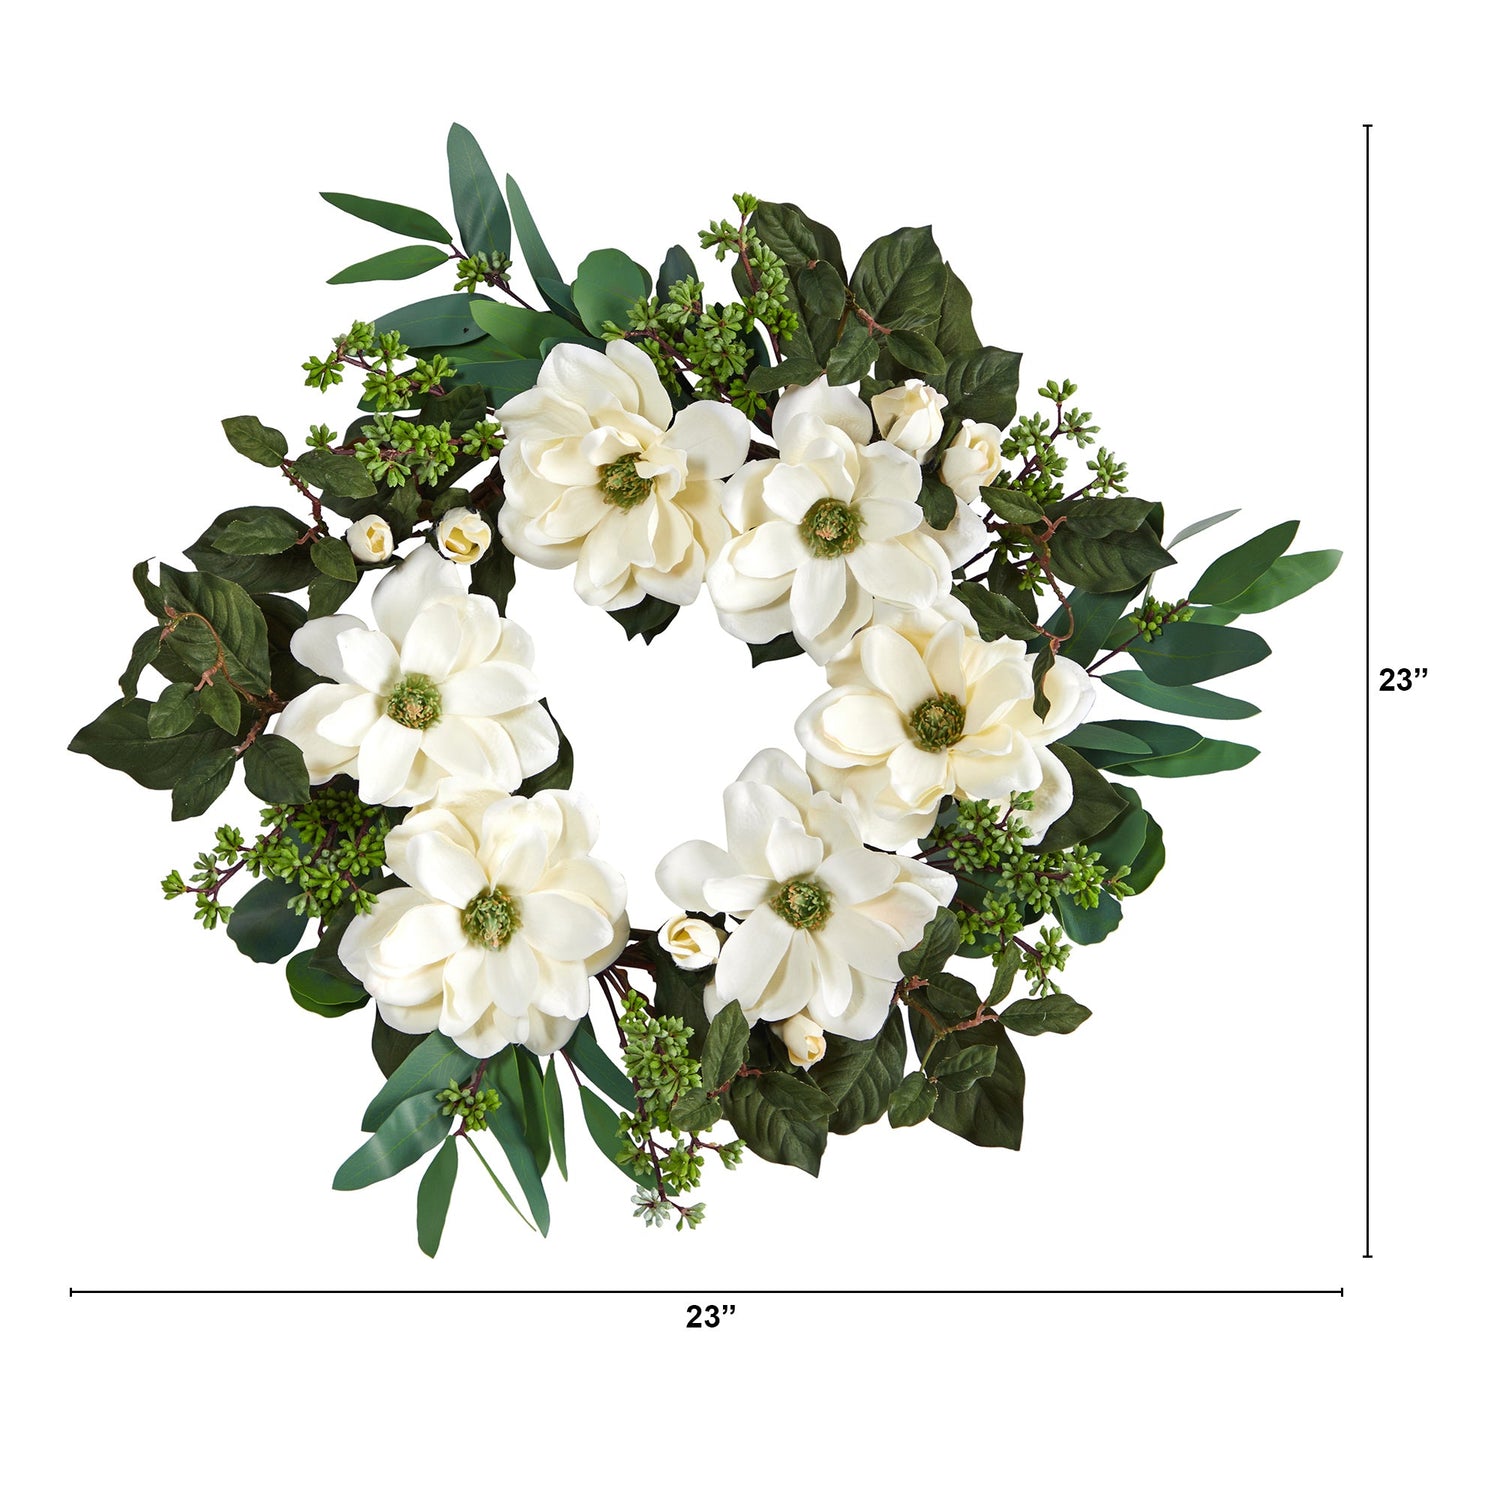 23” Magnolia, Eucalyptus and Berries Artificial Wreath